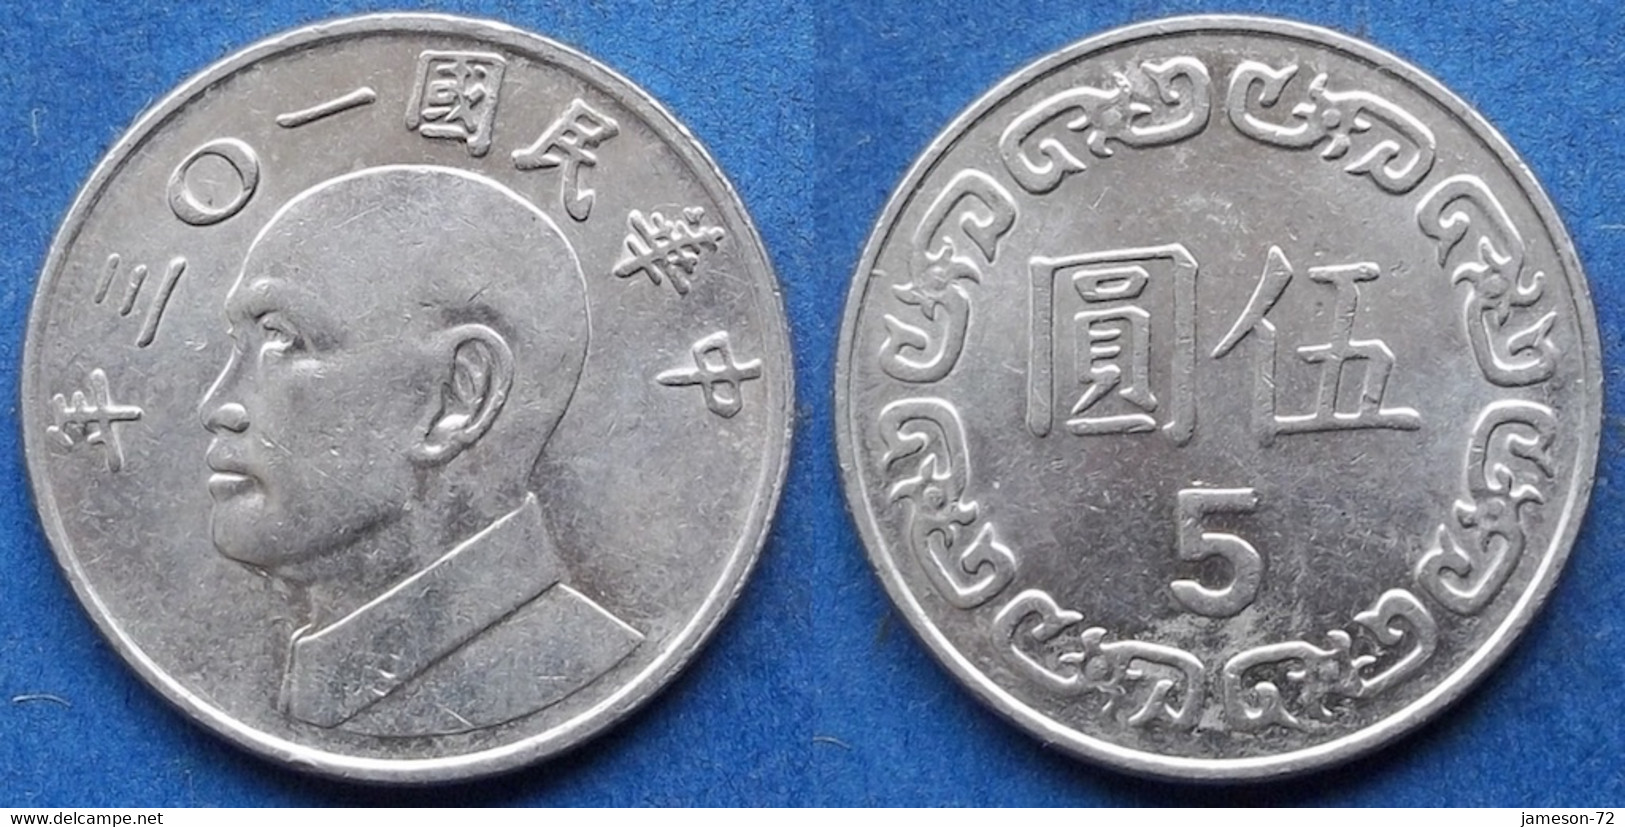 TAIWAN - 5 Yuan Year 103 (2014) Y# 552 Standard Coinage - Edelweiss Coins - Taiwan